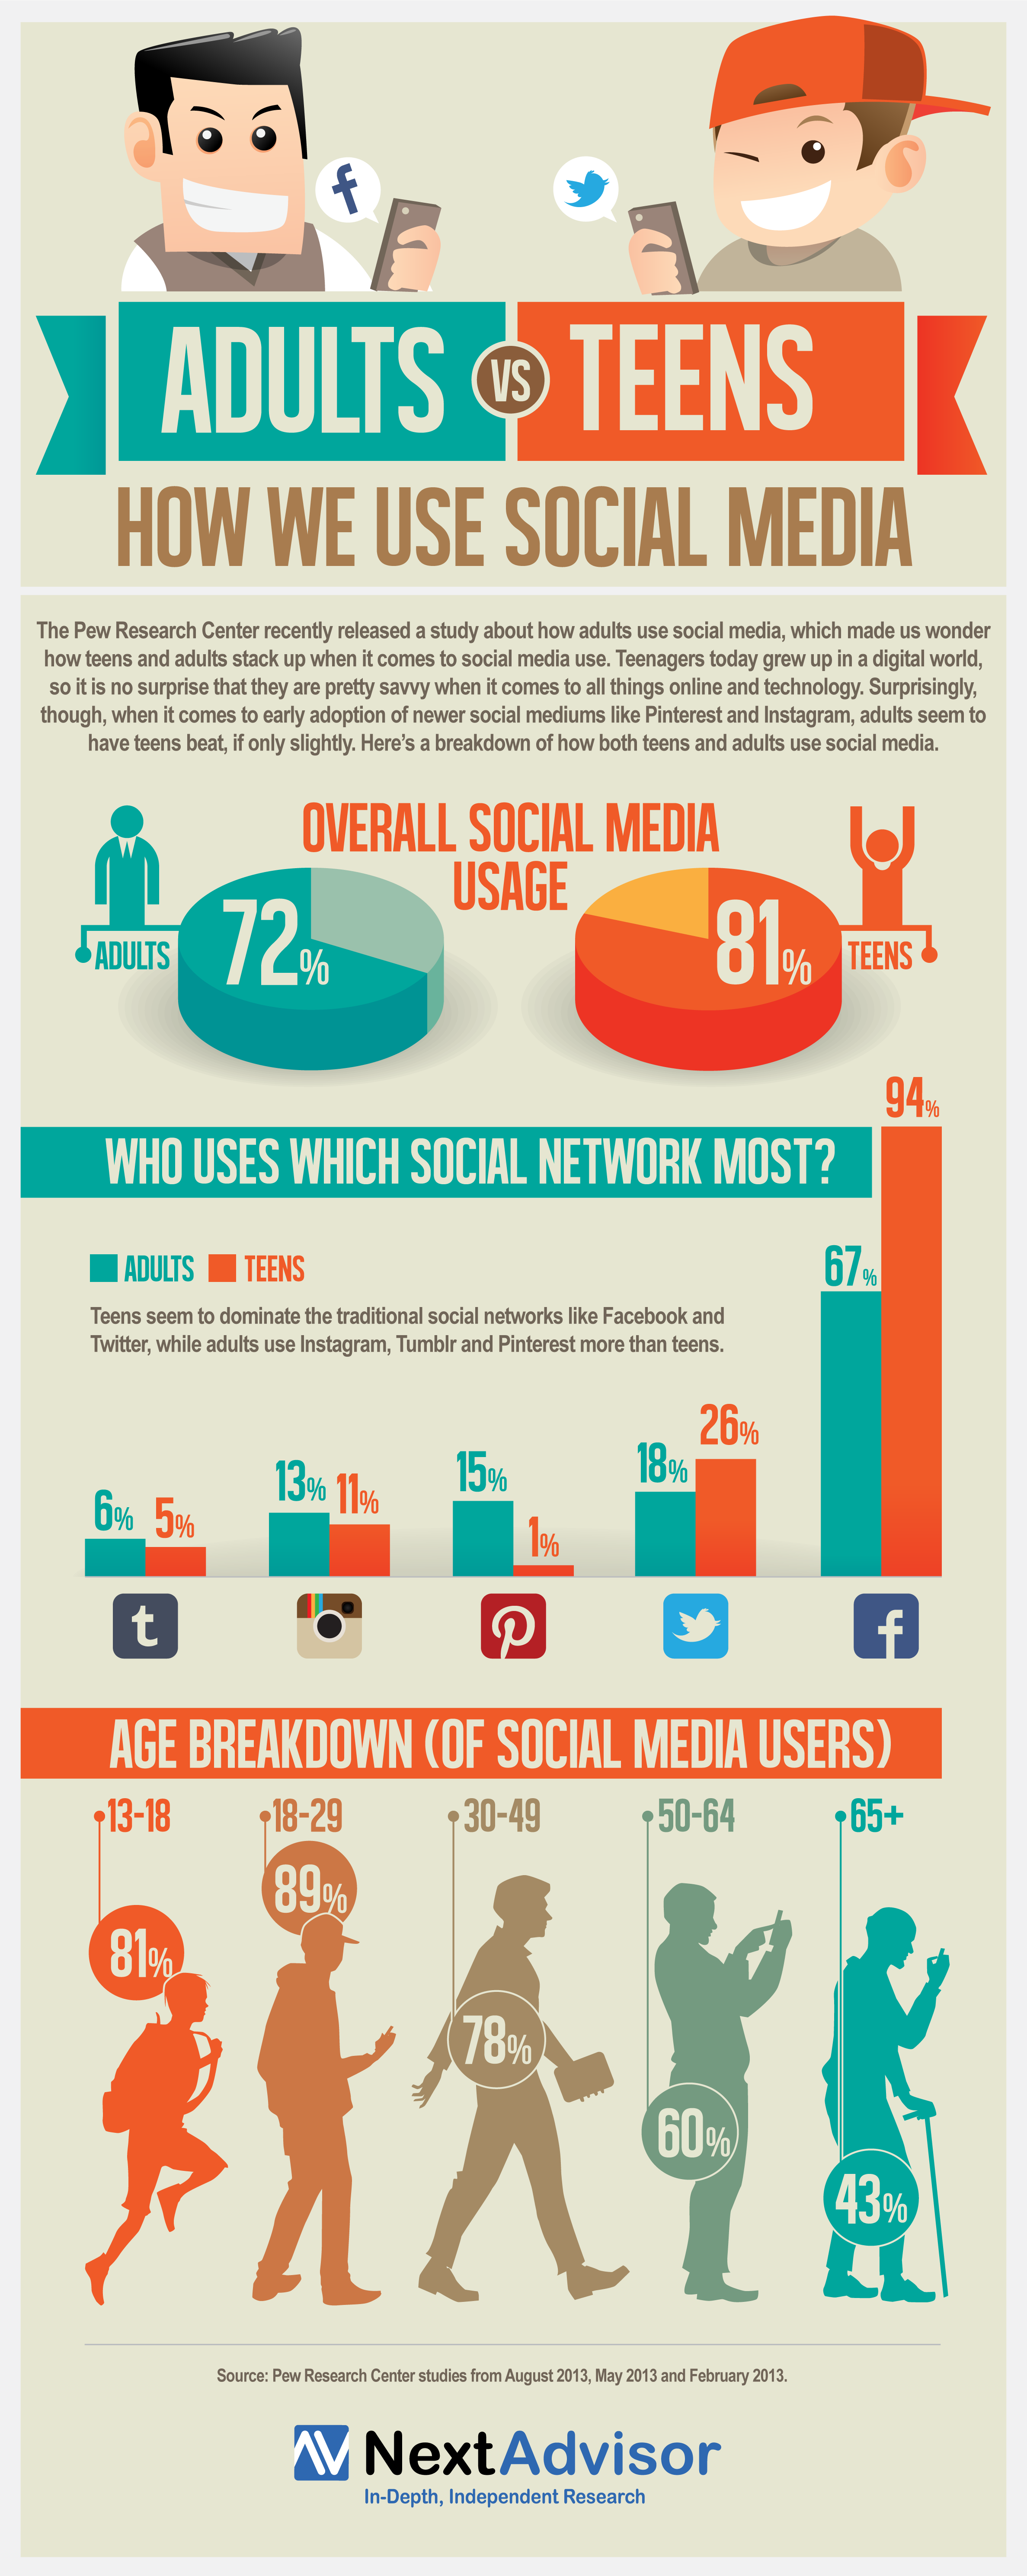 nextadvisor_infographic_social-media-REVISED